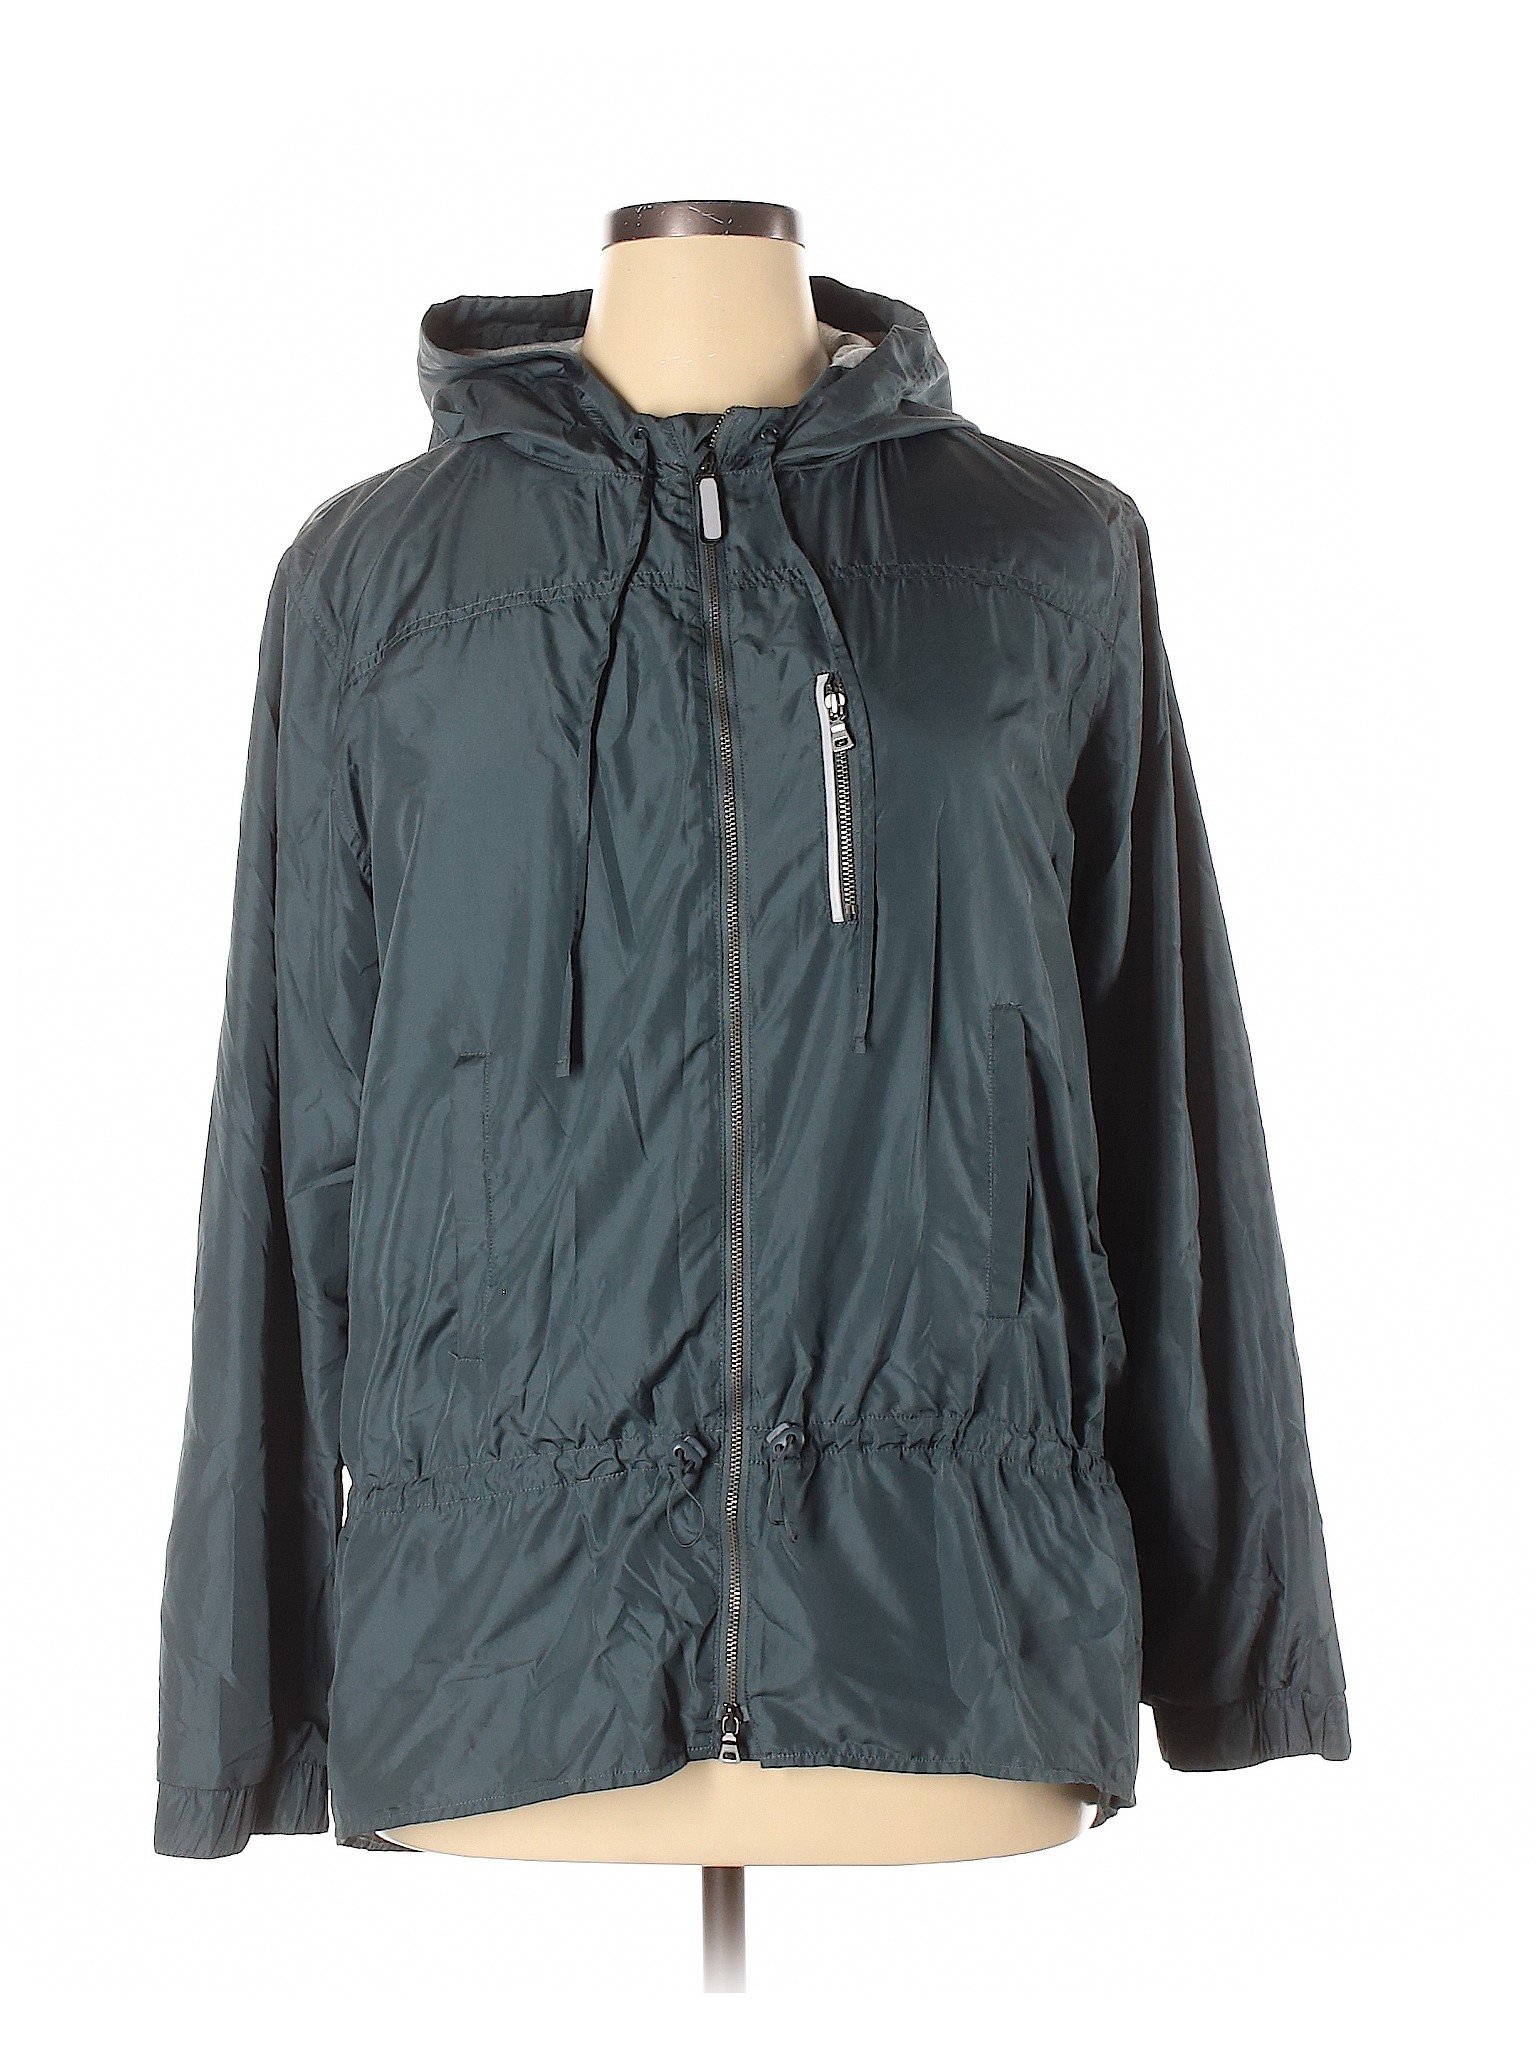 Gap Women Green Jacket XL | eBay